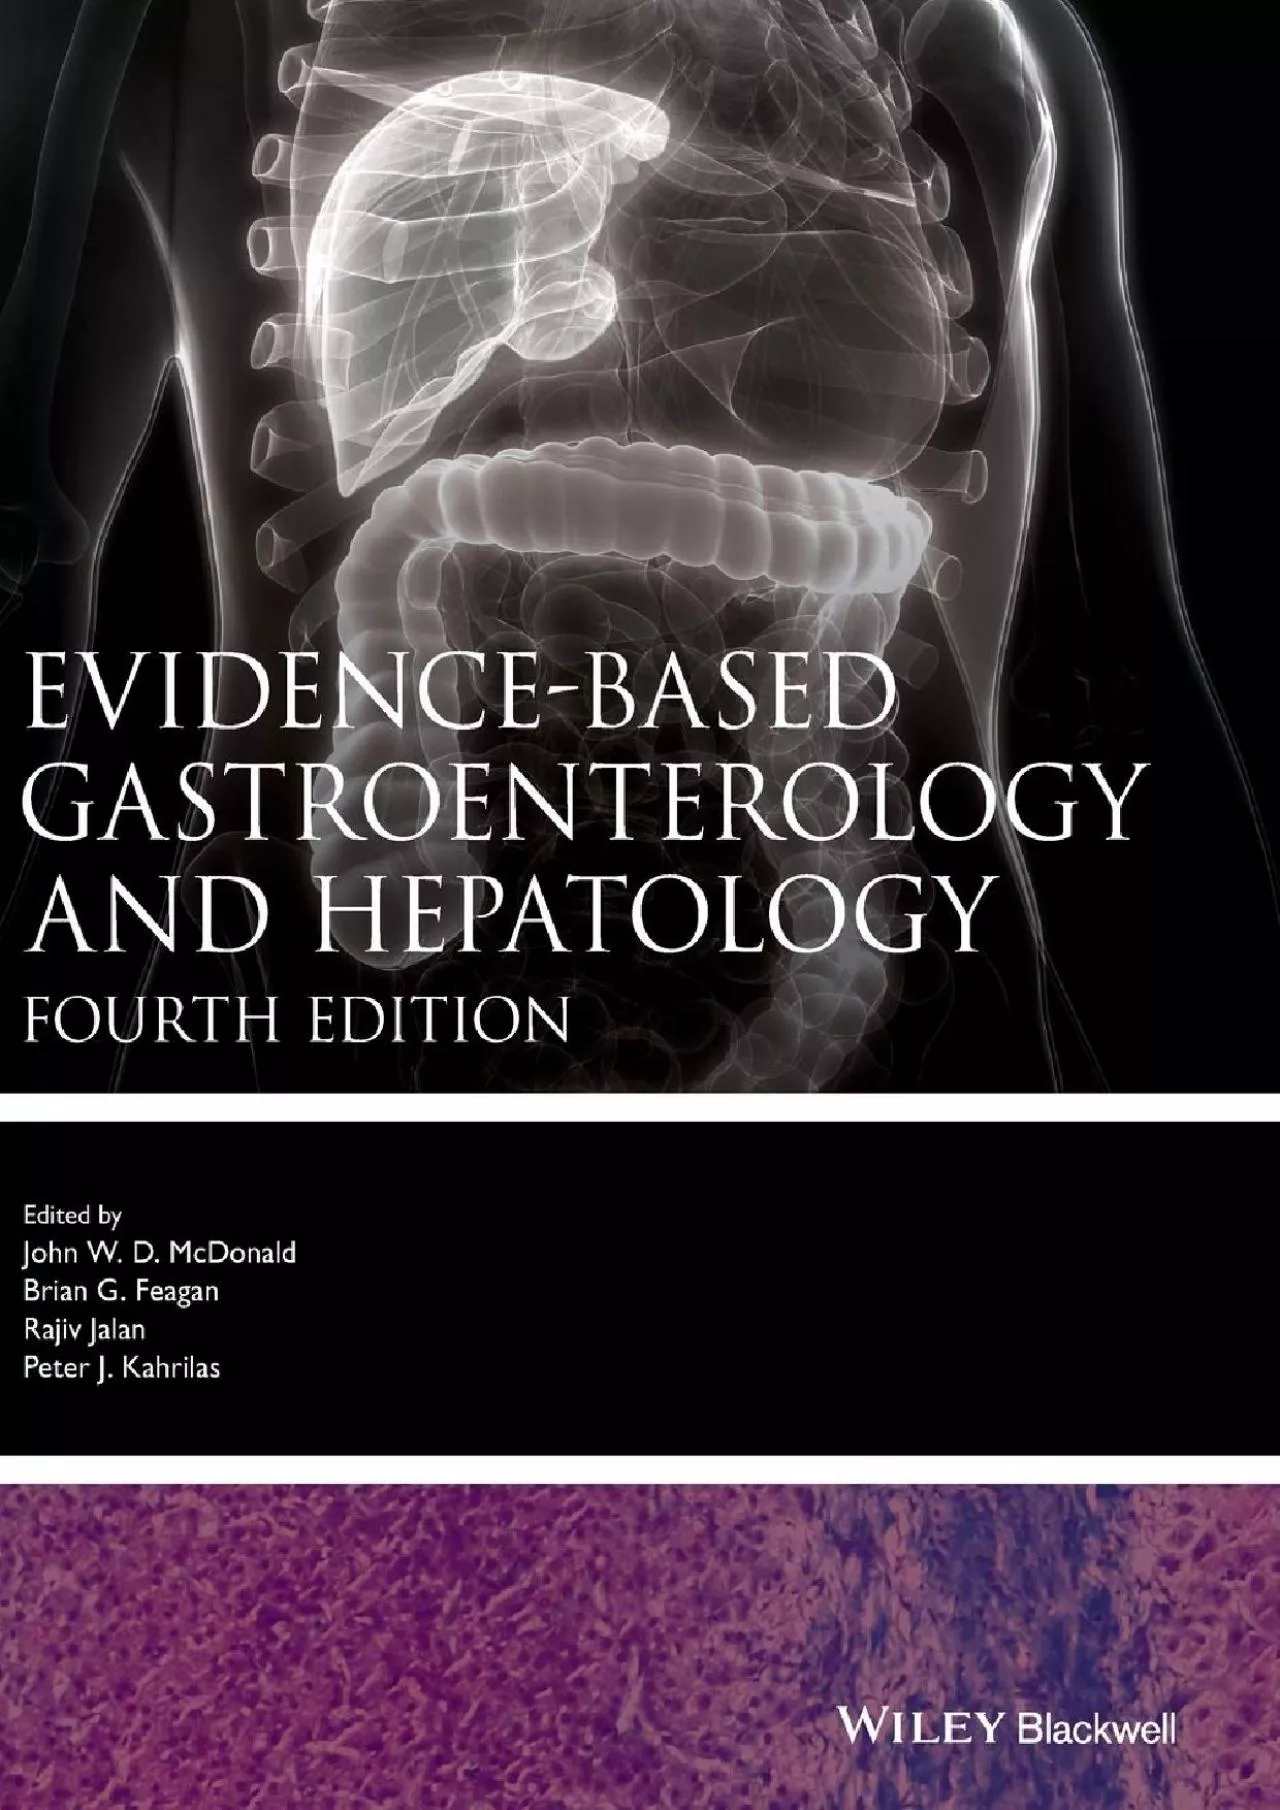 (BOOK)-Evidence-based Gastroenterology and Hepatology (Evidence-Based Medicine)